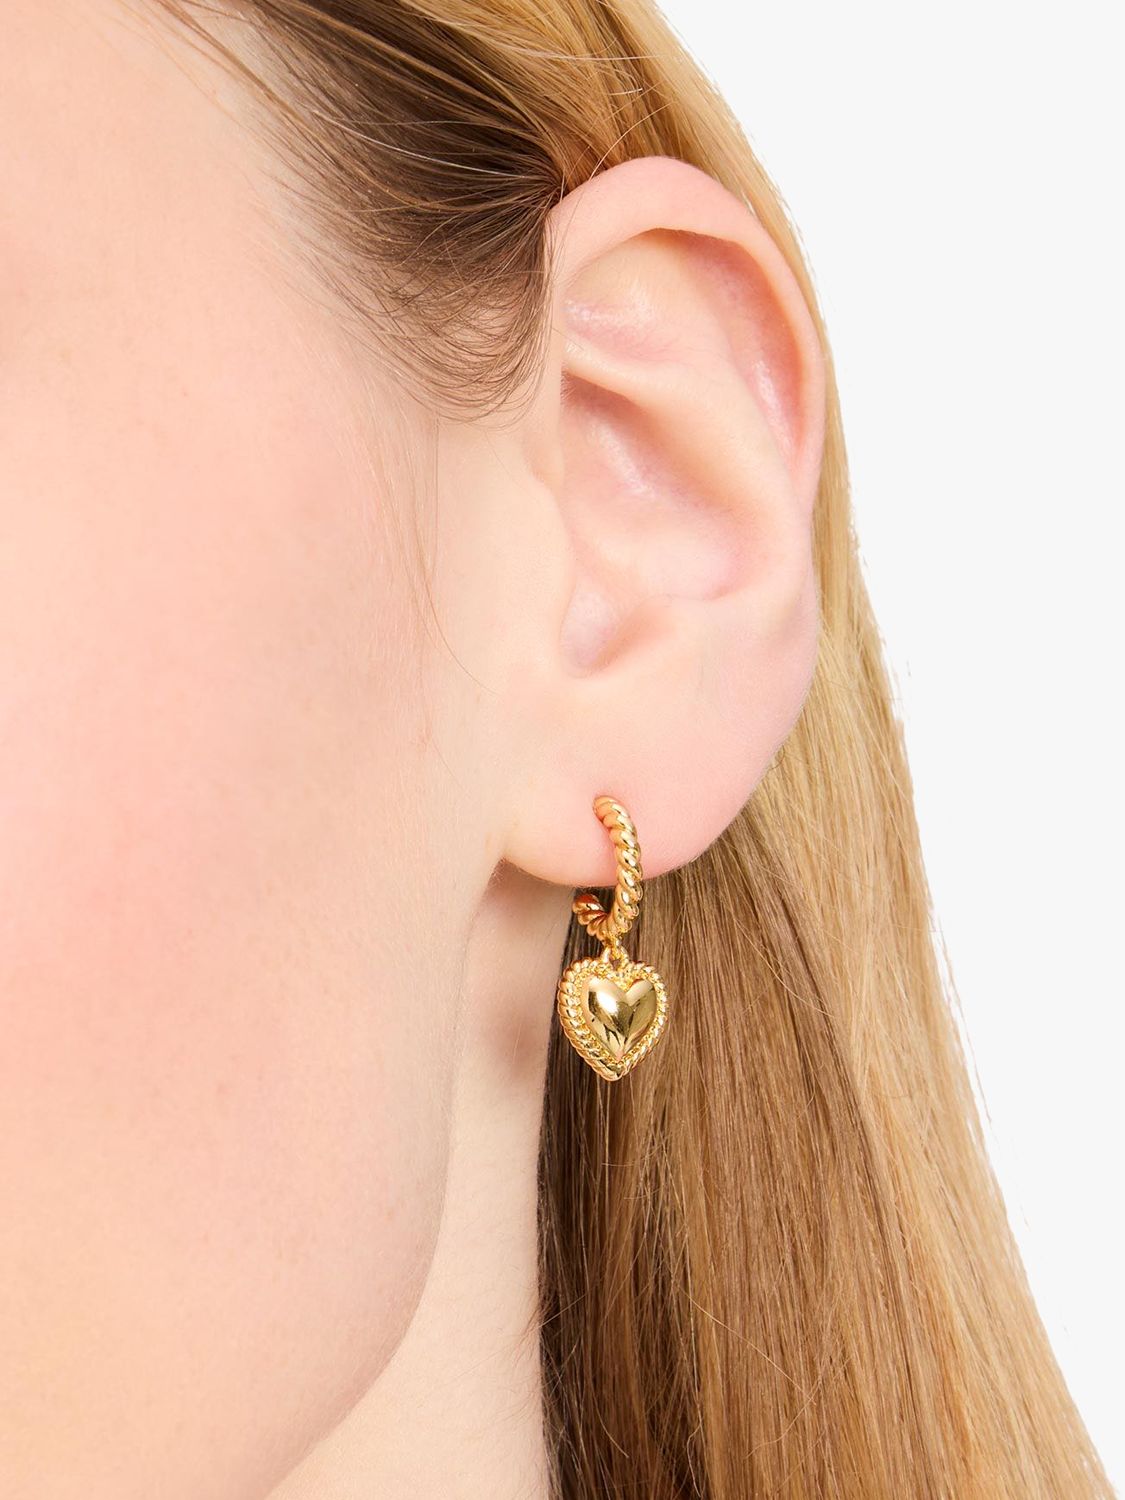 Buy kate spade new york Golden Hour Heart Drop Hoop Earrings, Gold Online at johnlewis.com